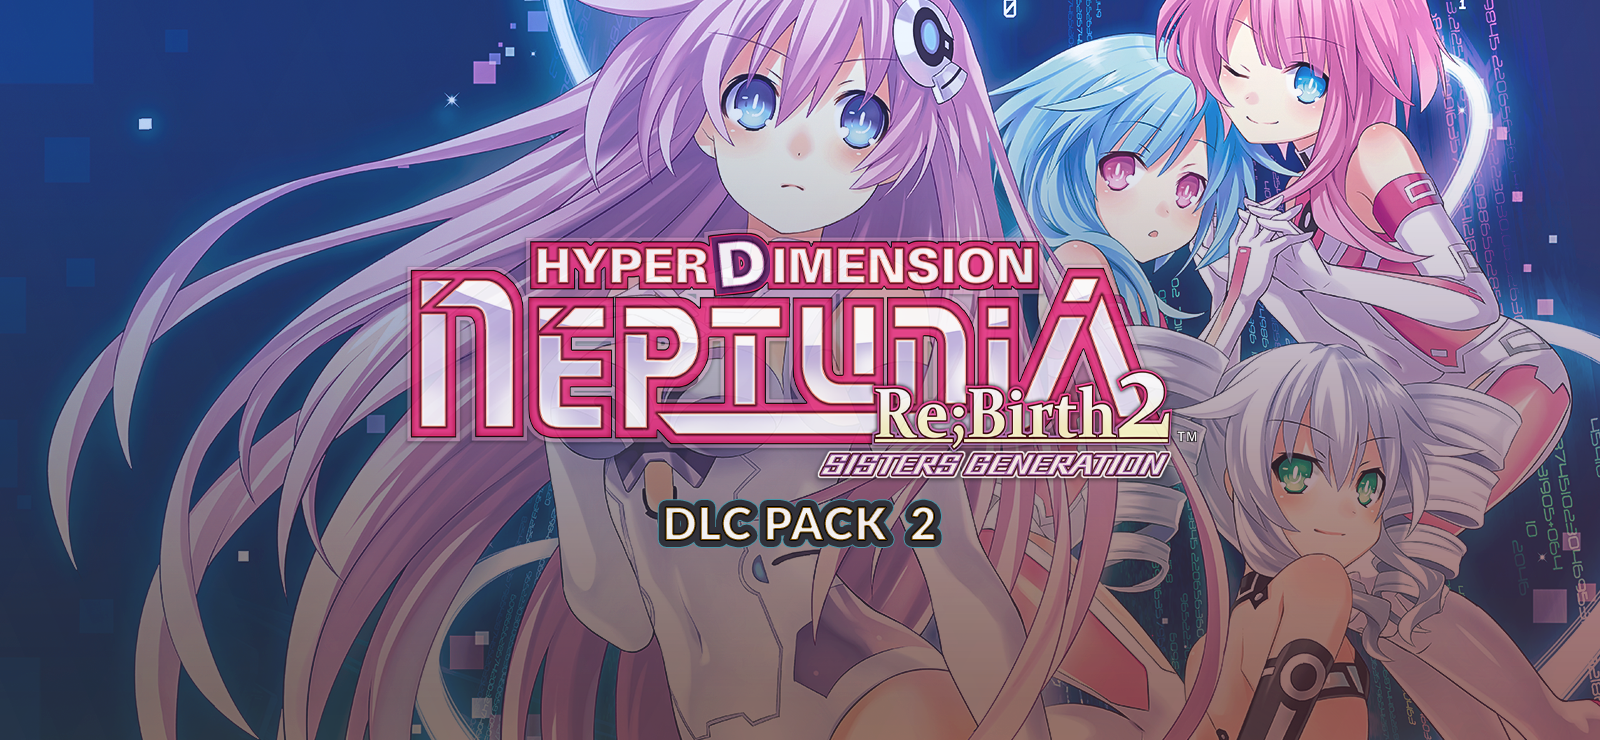 Hyperdimension Neptunia Re;Birth2: Sisters Generation - DLC Pack 2